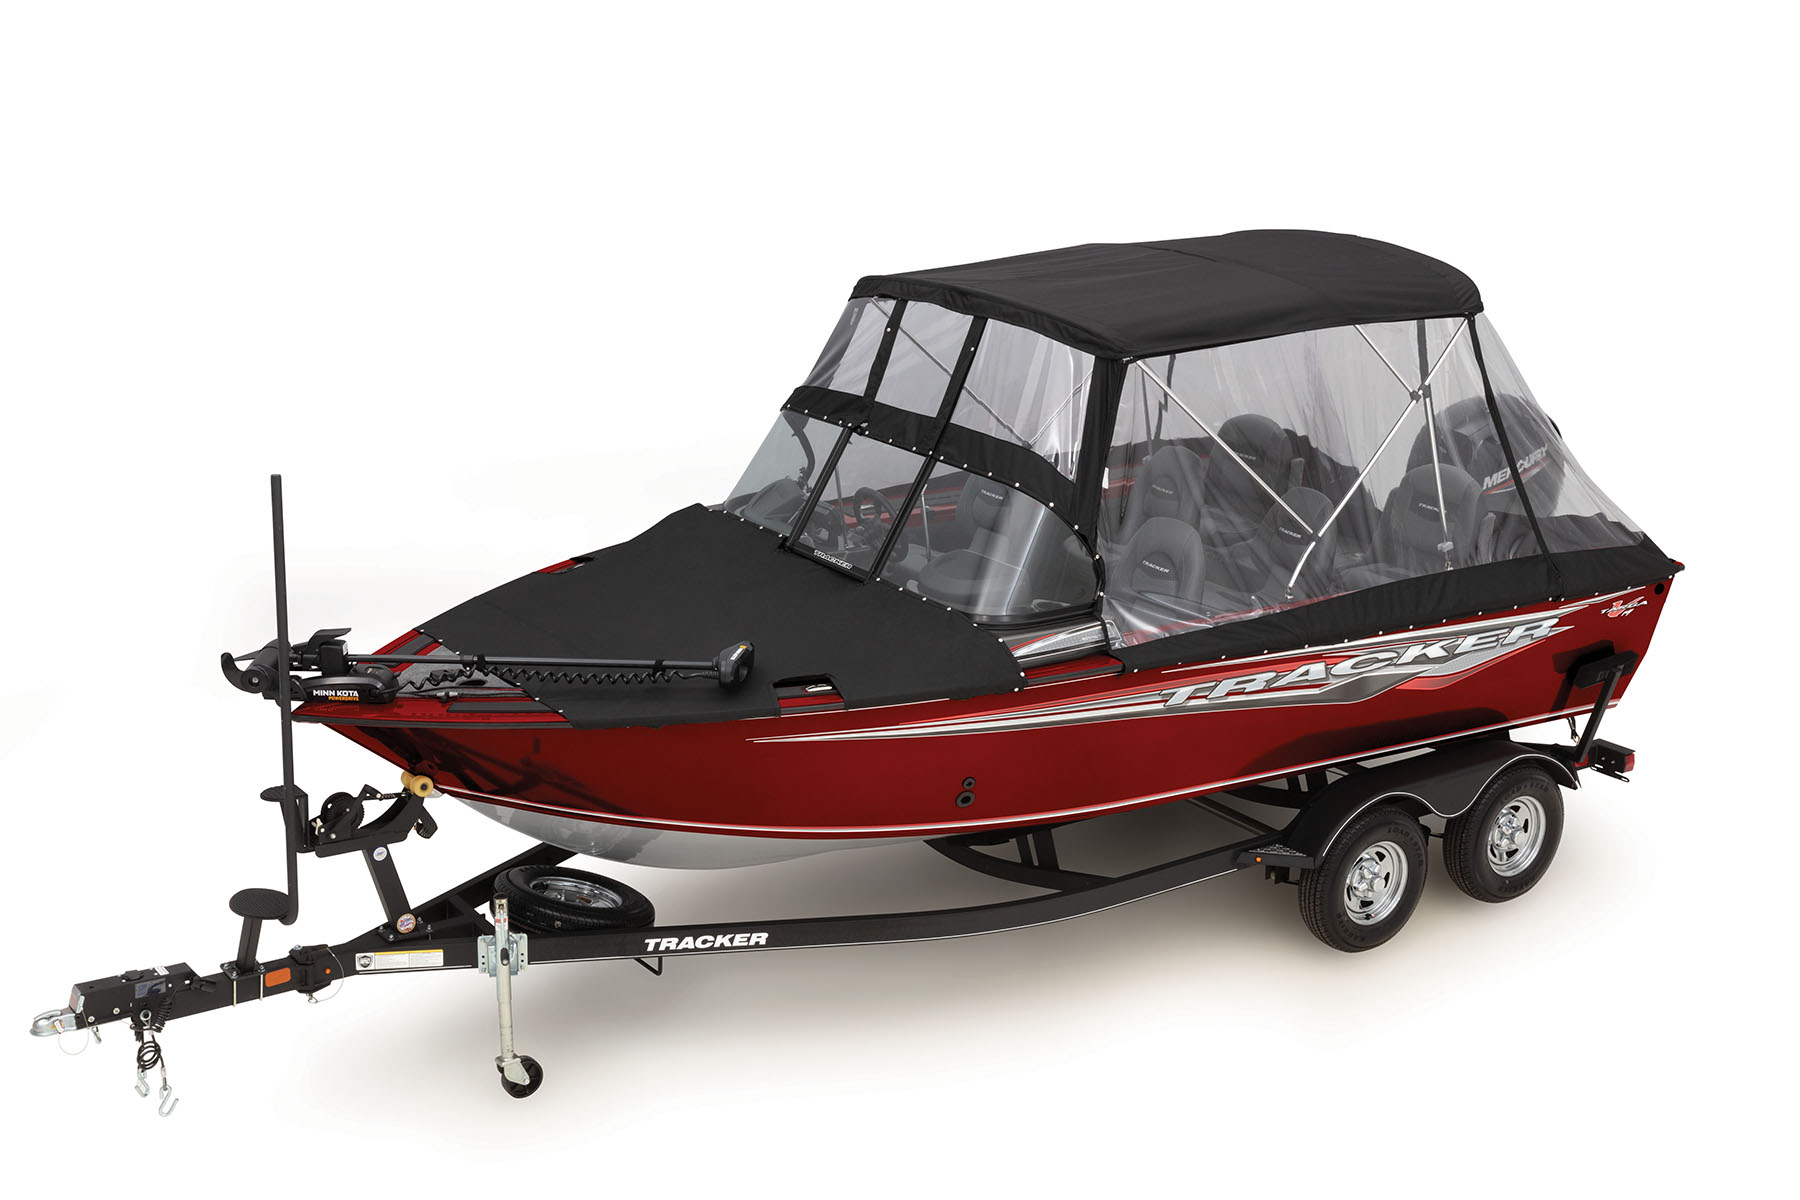 TRACKER 1600 TF Trailerable Fishing Bass Boat Storage Cover Heavy duty